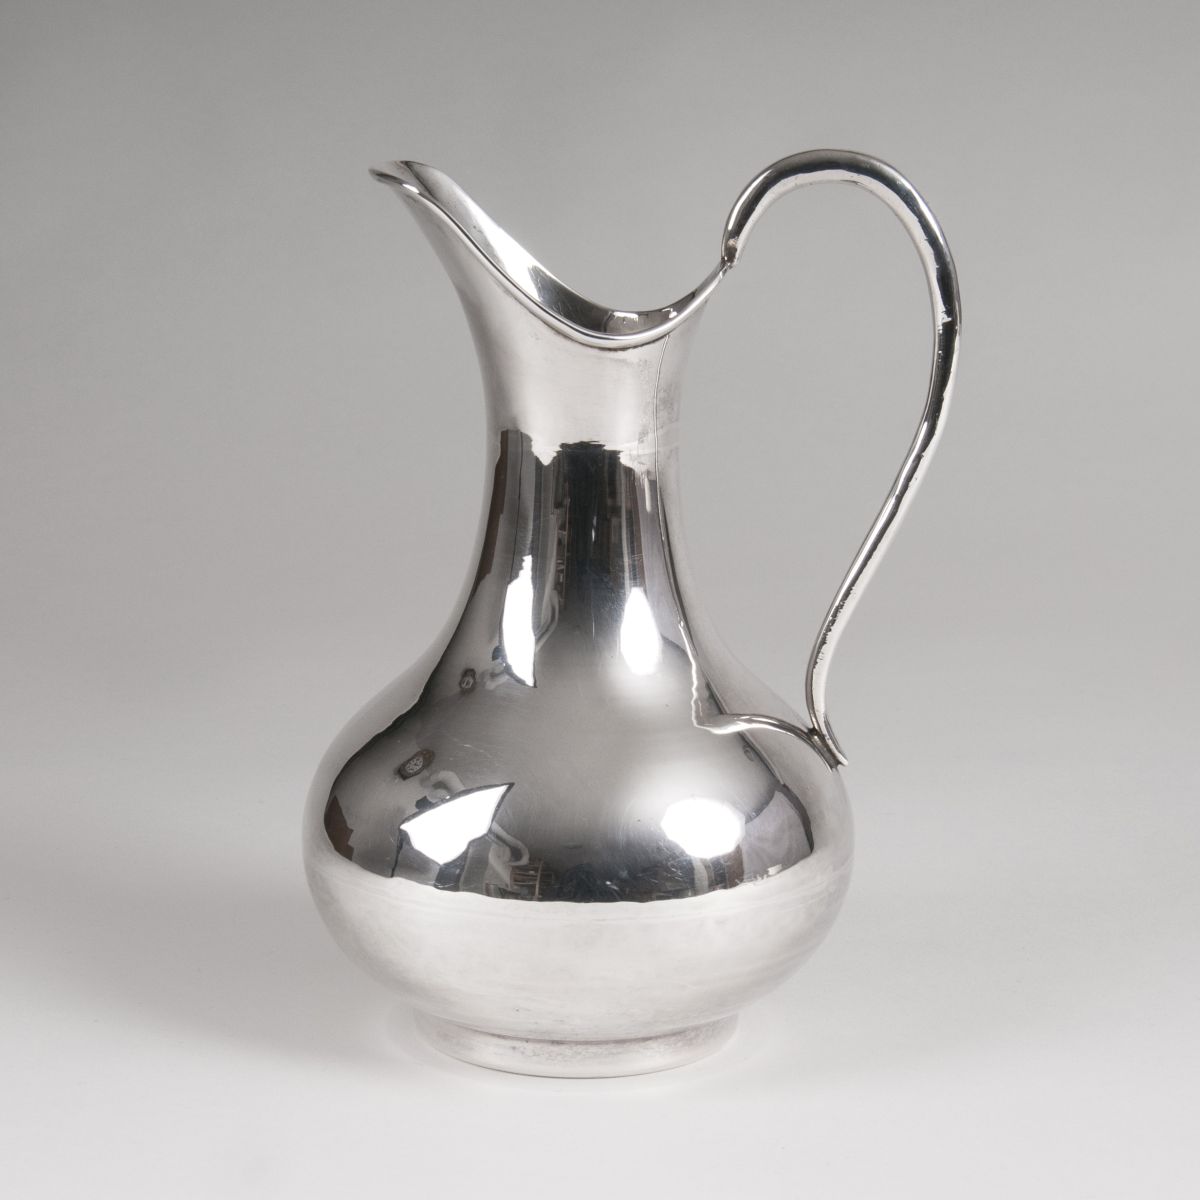 An elegant water jug